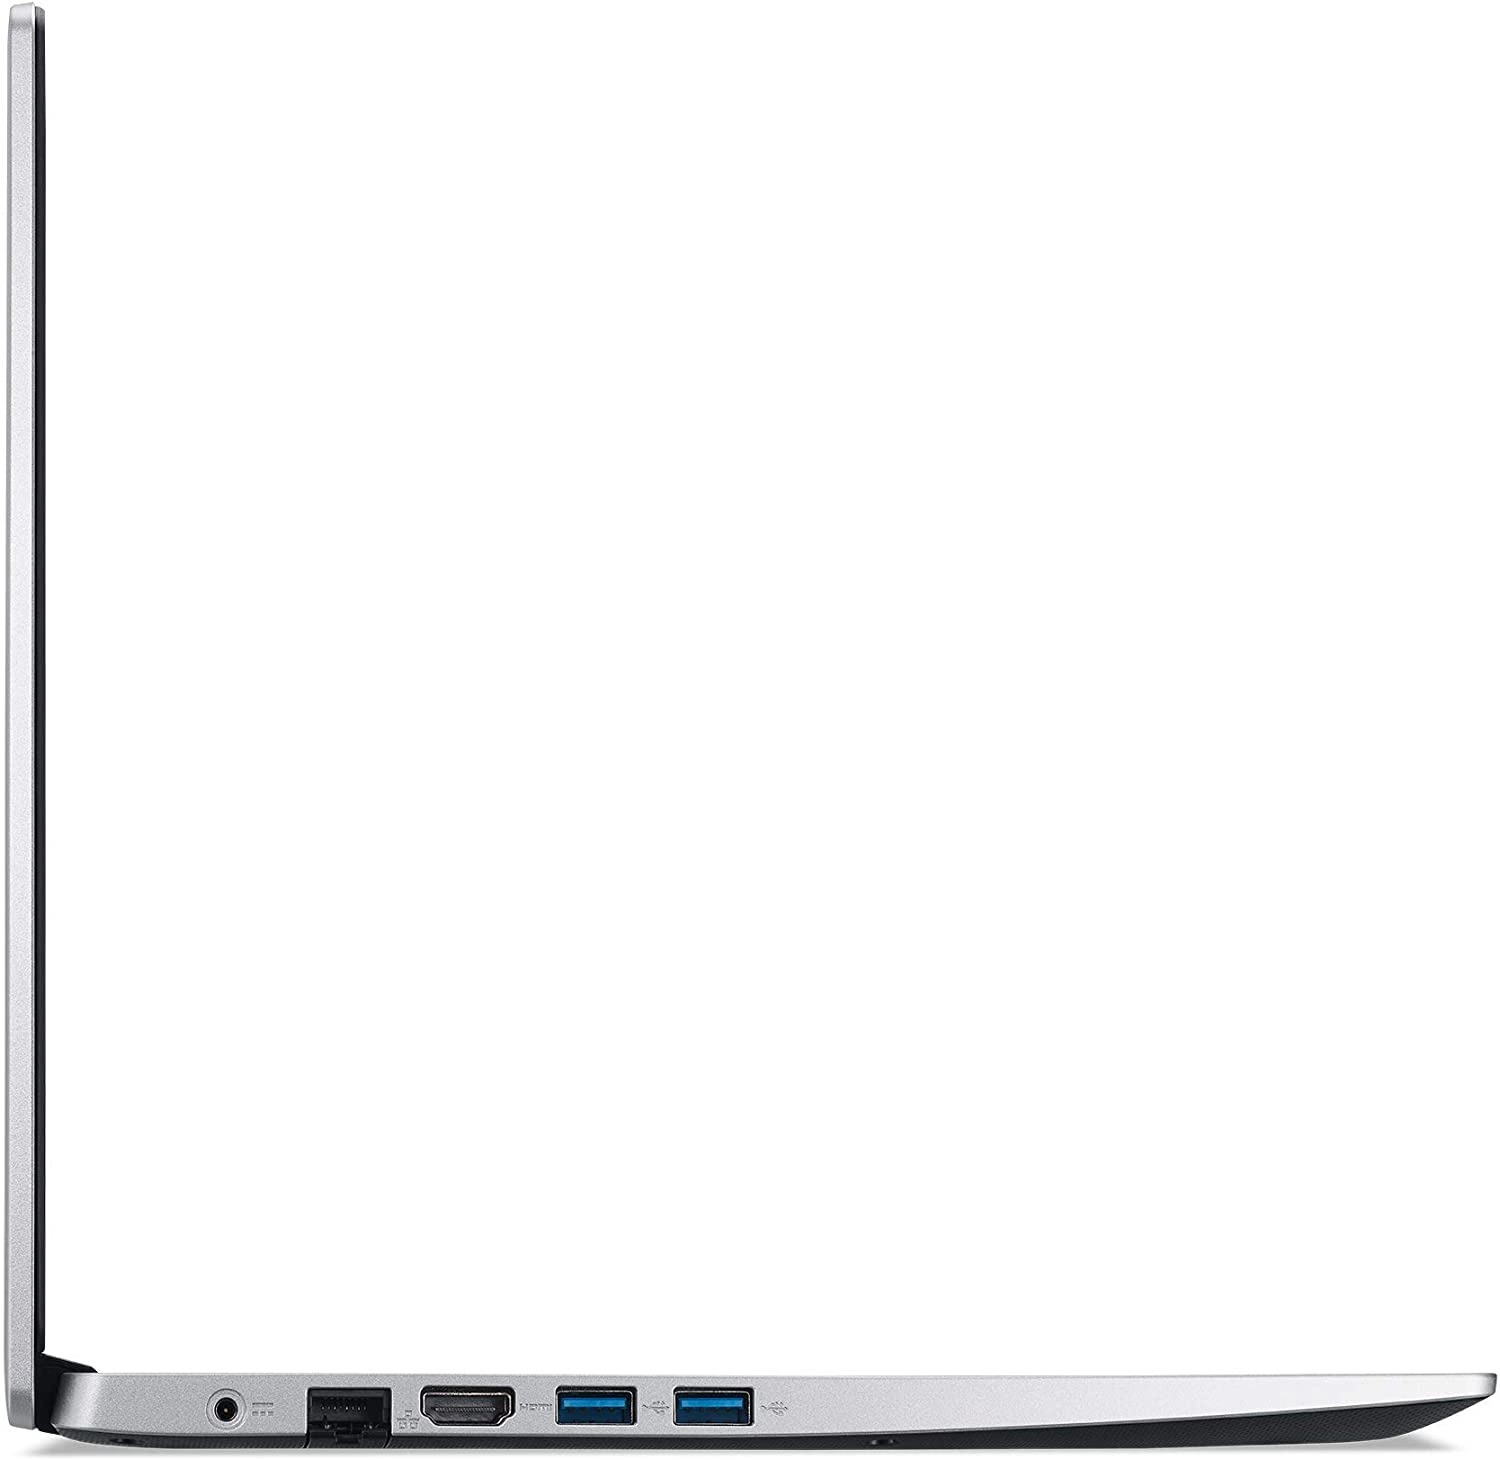 Acer A315-23-R15Y laptop image